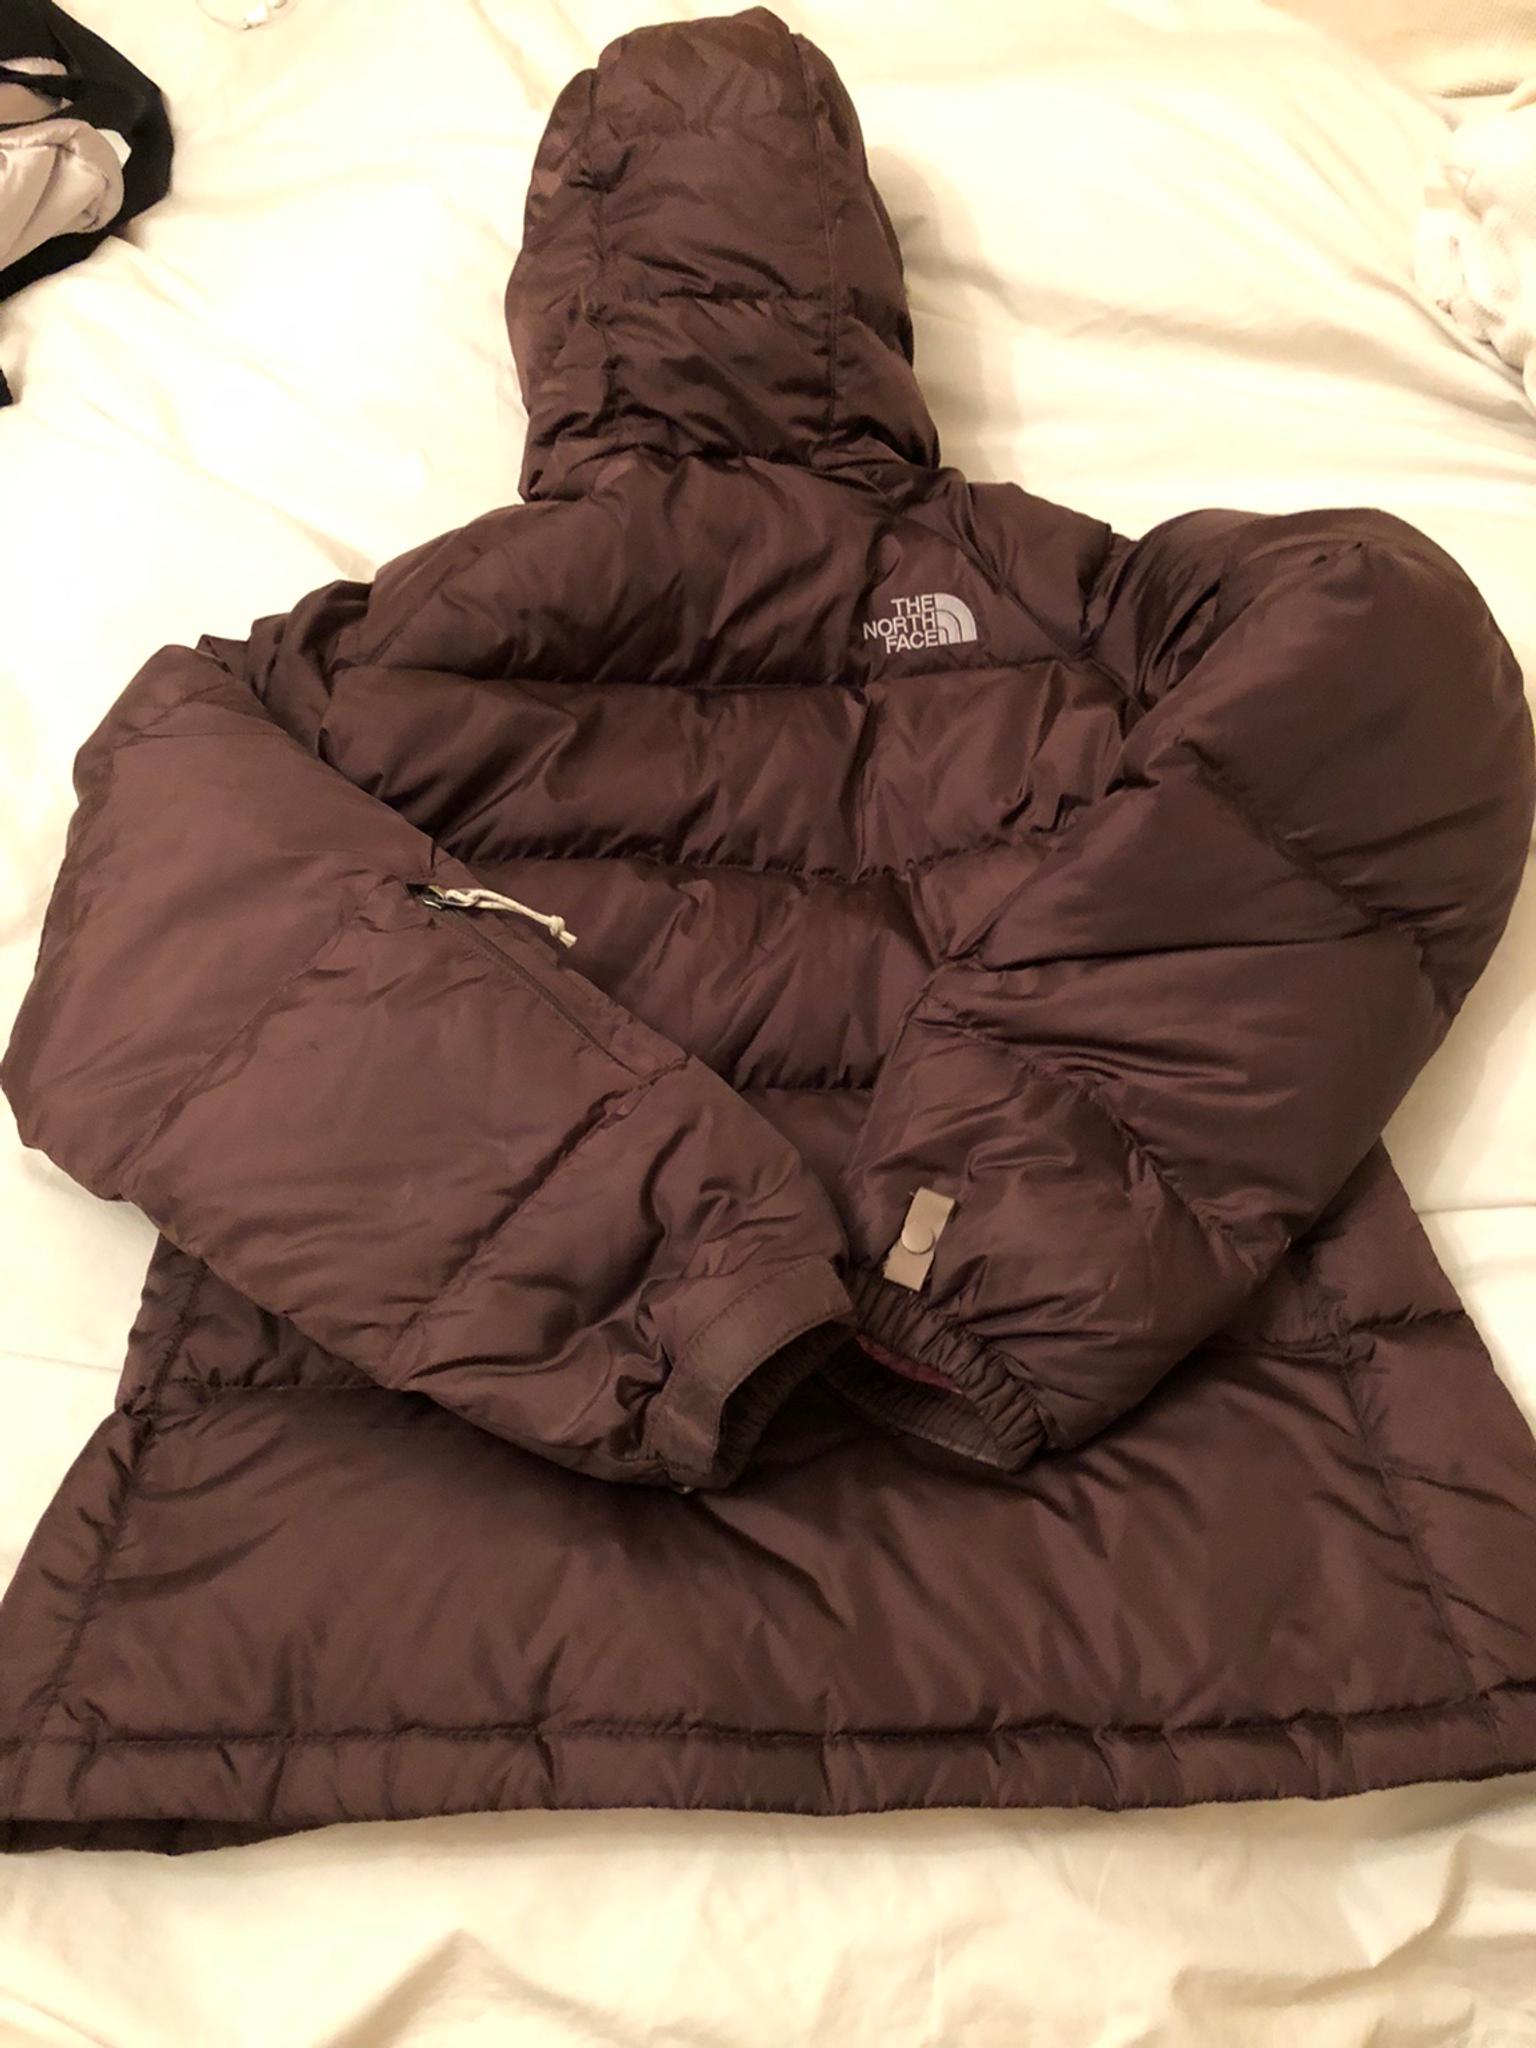 Brown 700 North Face Puffer Jacket In Pr7 Chorley Fur 59 00 Zum Verkauf Shpock De